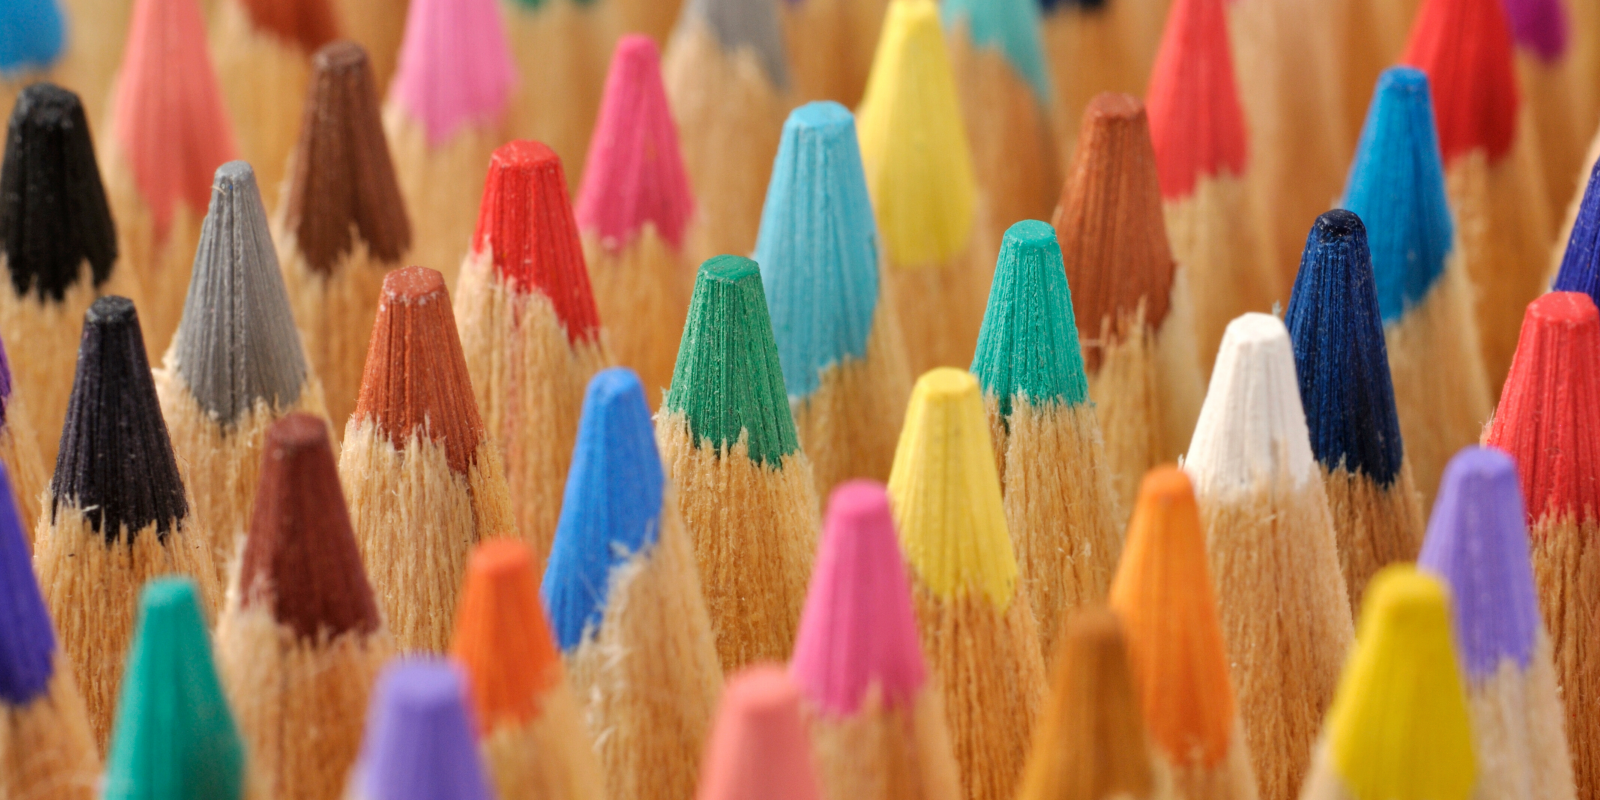 36 crayons de couleur en bois recyclé Staedtler